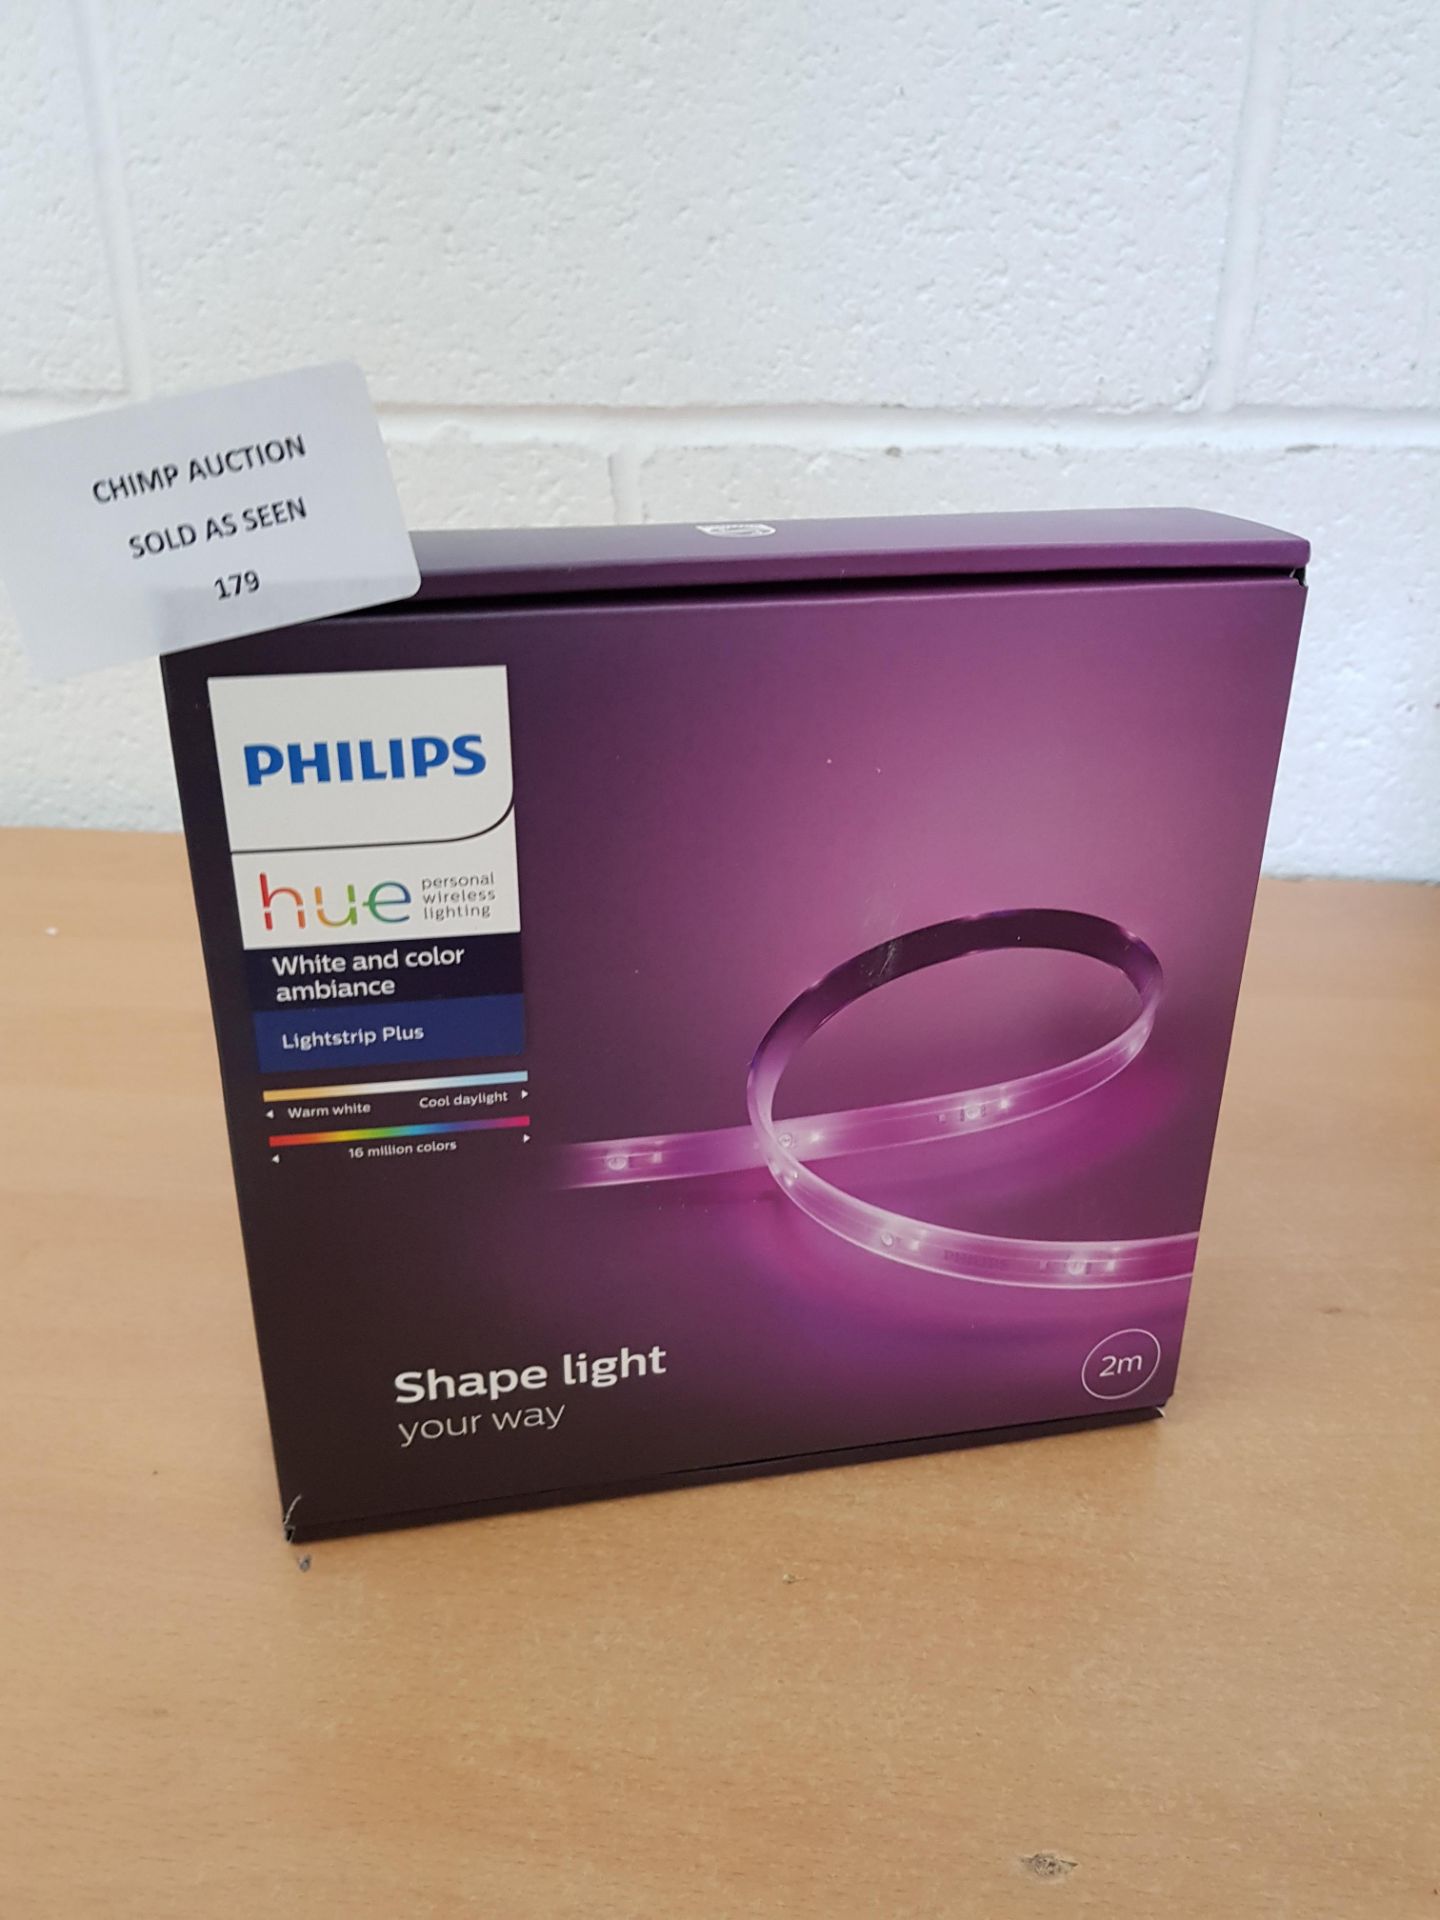 Philips Hue LightStrip Plus 2 m Dimmable LED Smart Kit RRP £69.99.